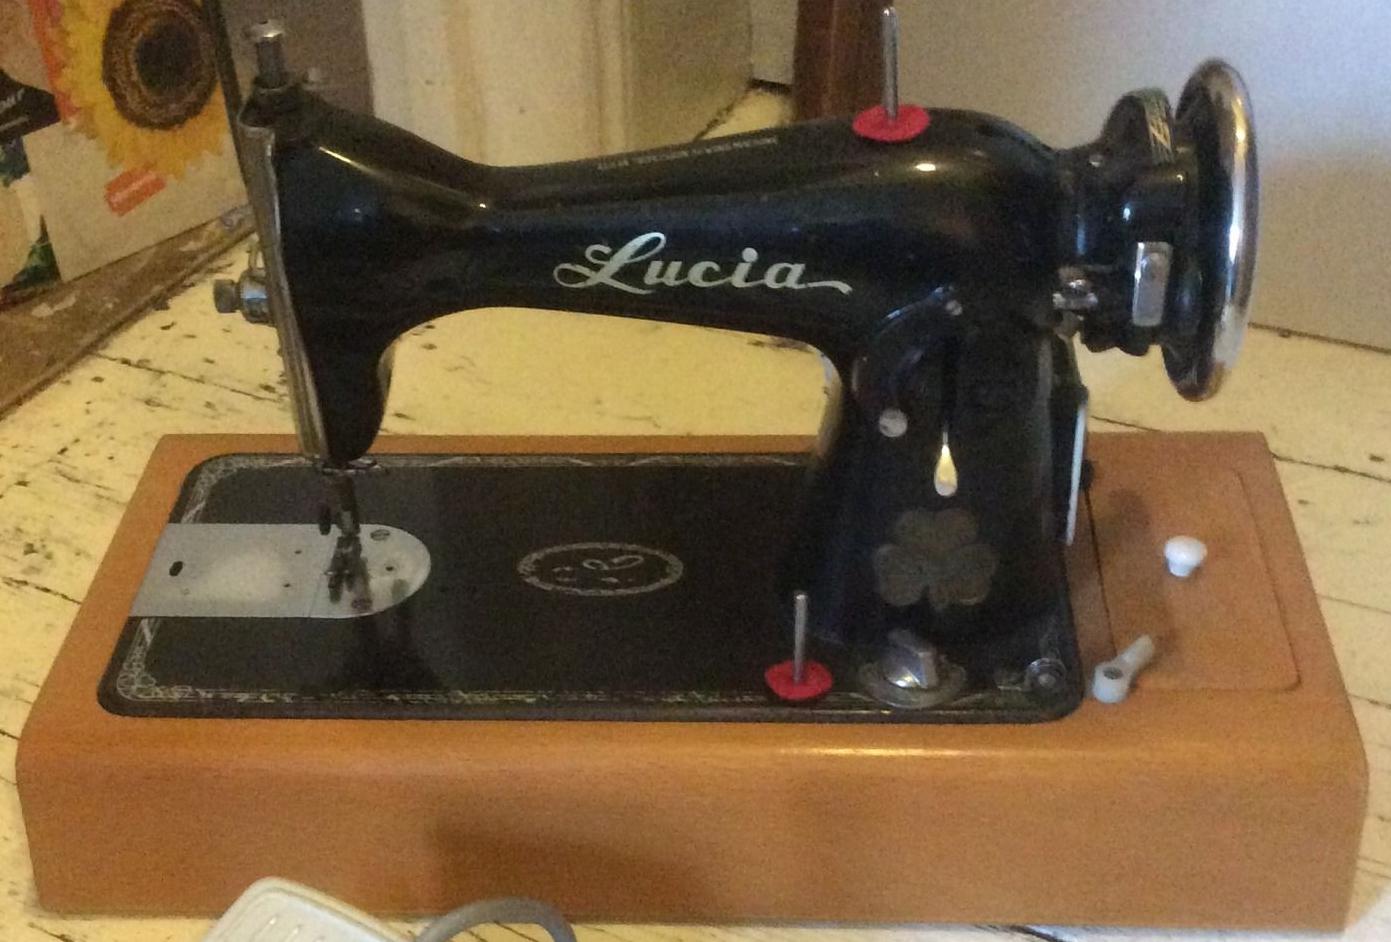 Lucia Sewing Machine Manual